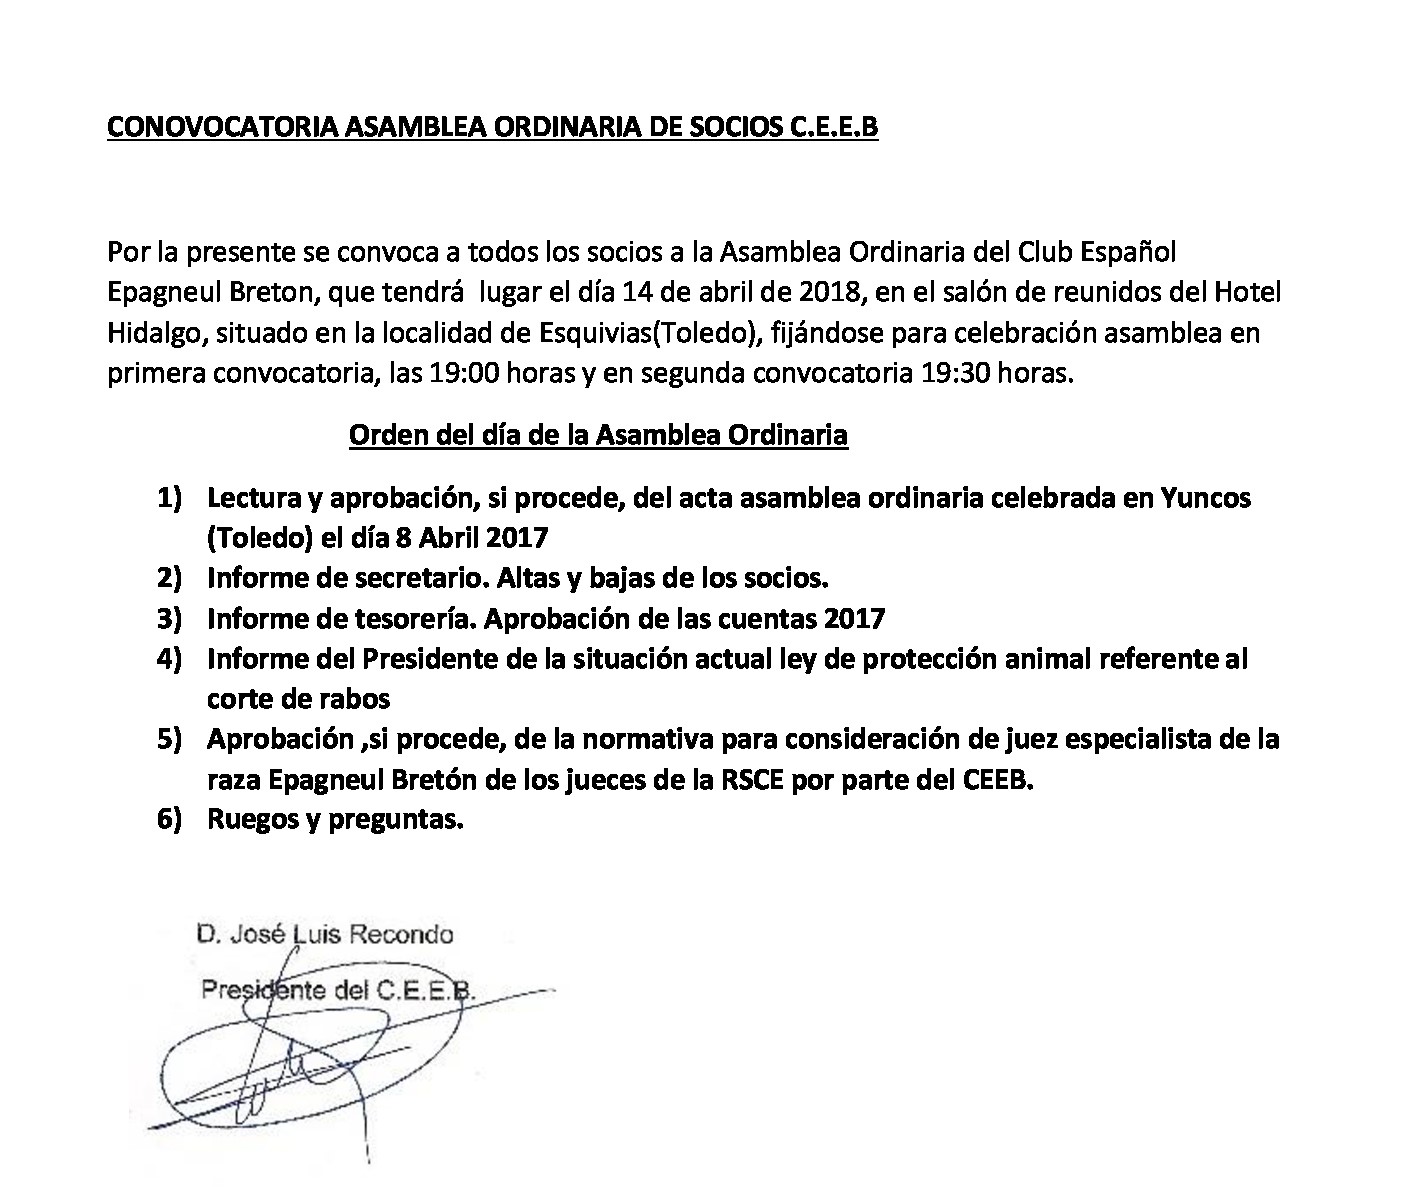 CONOVOCATORIA ASAMBLEA ORDINARIA DE SOCIOS C